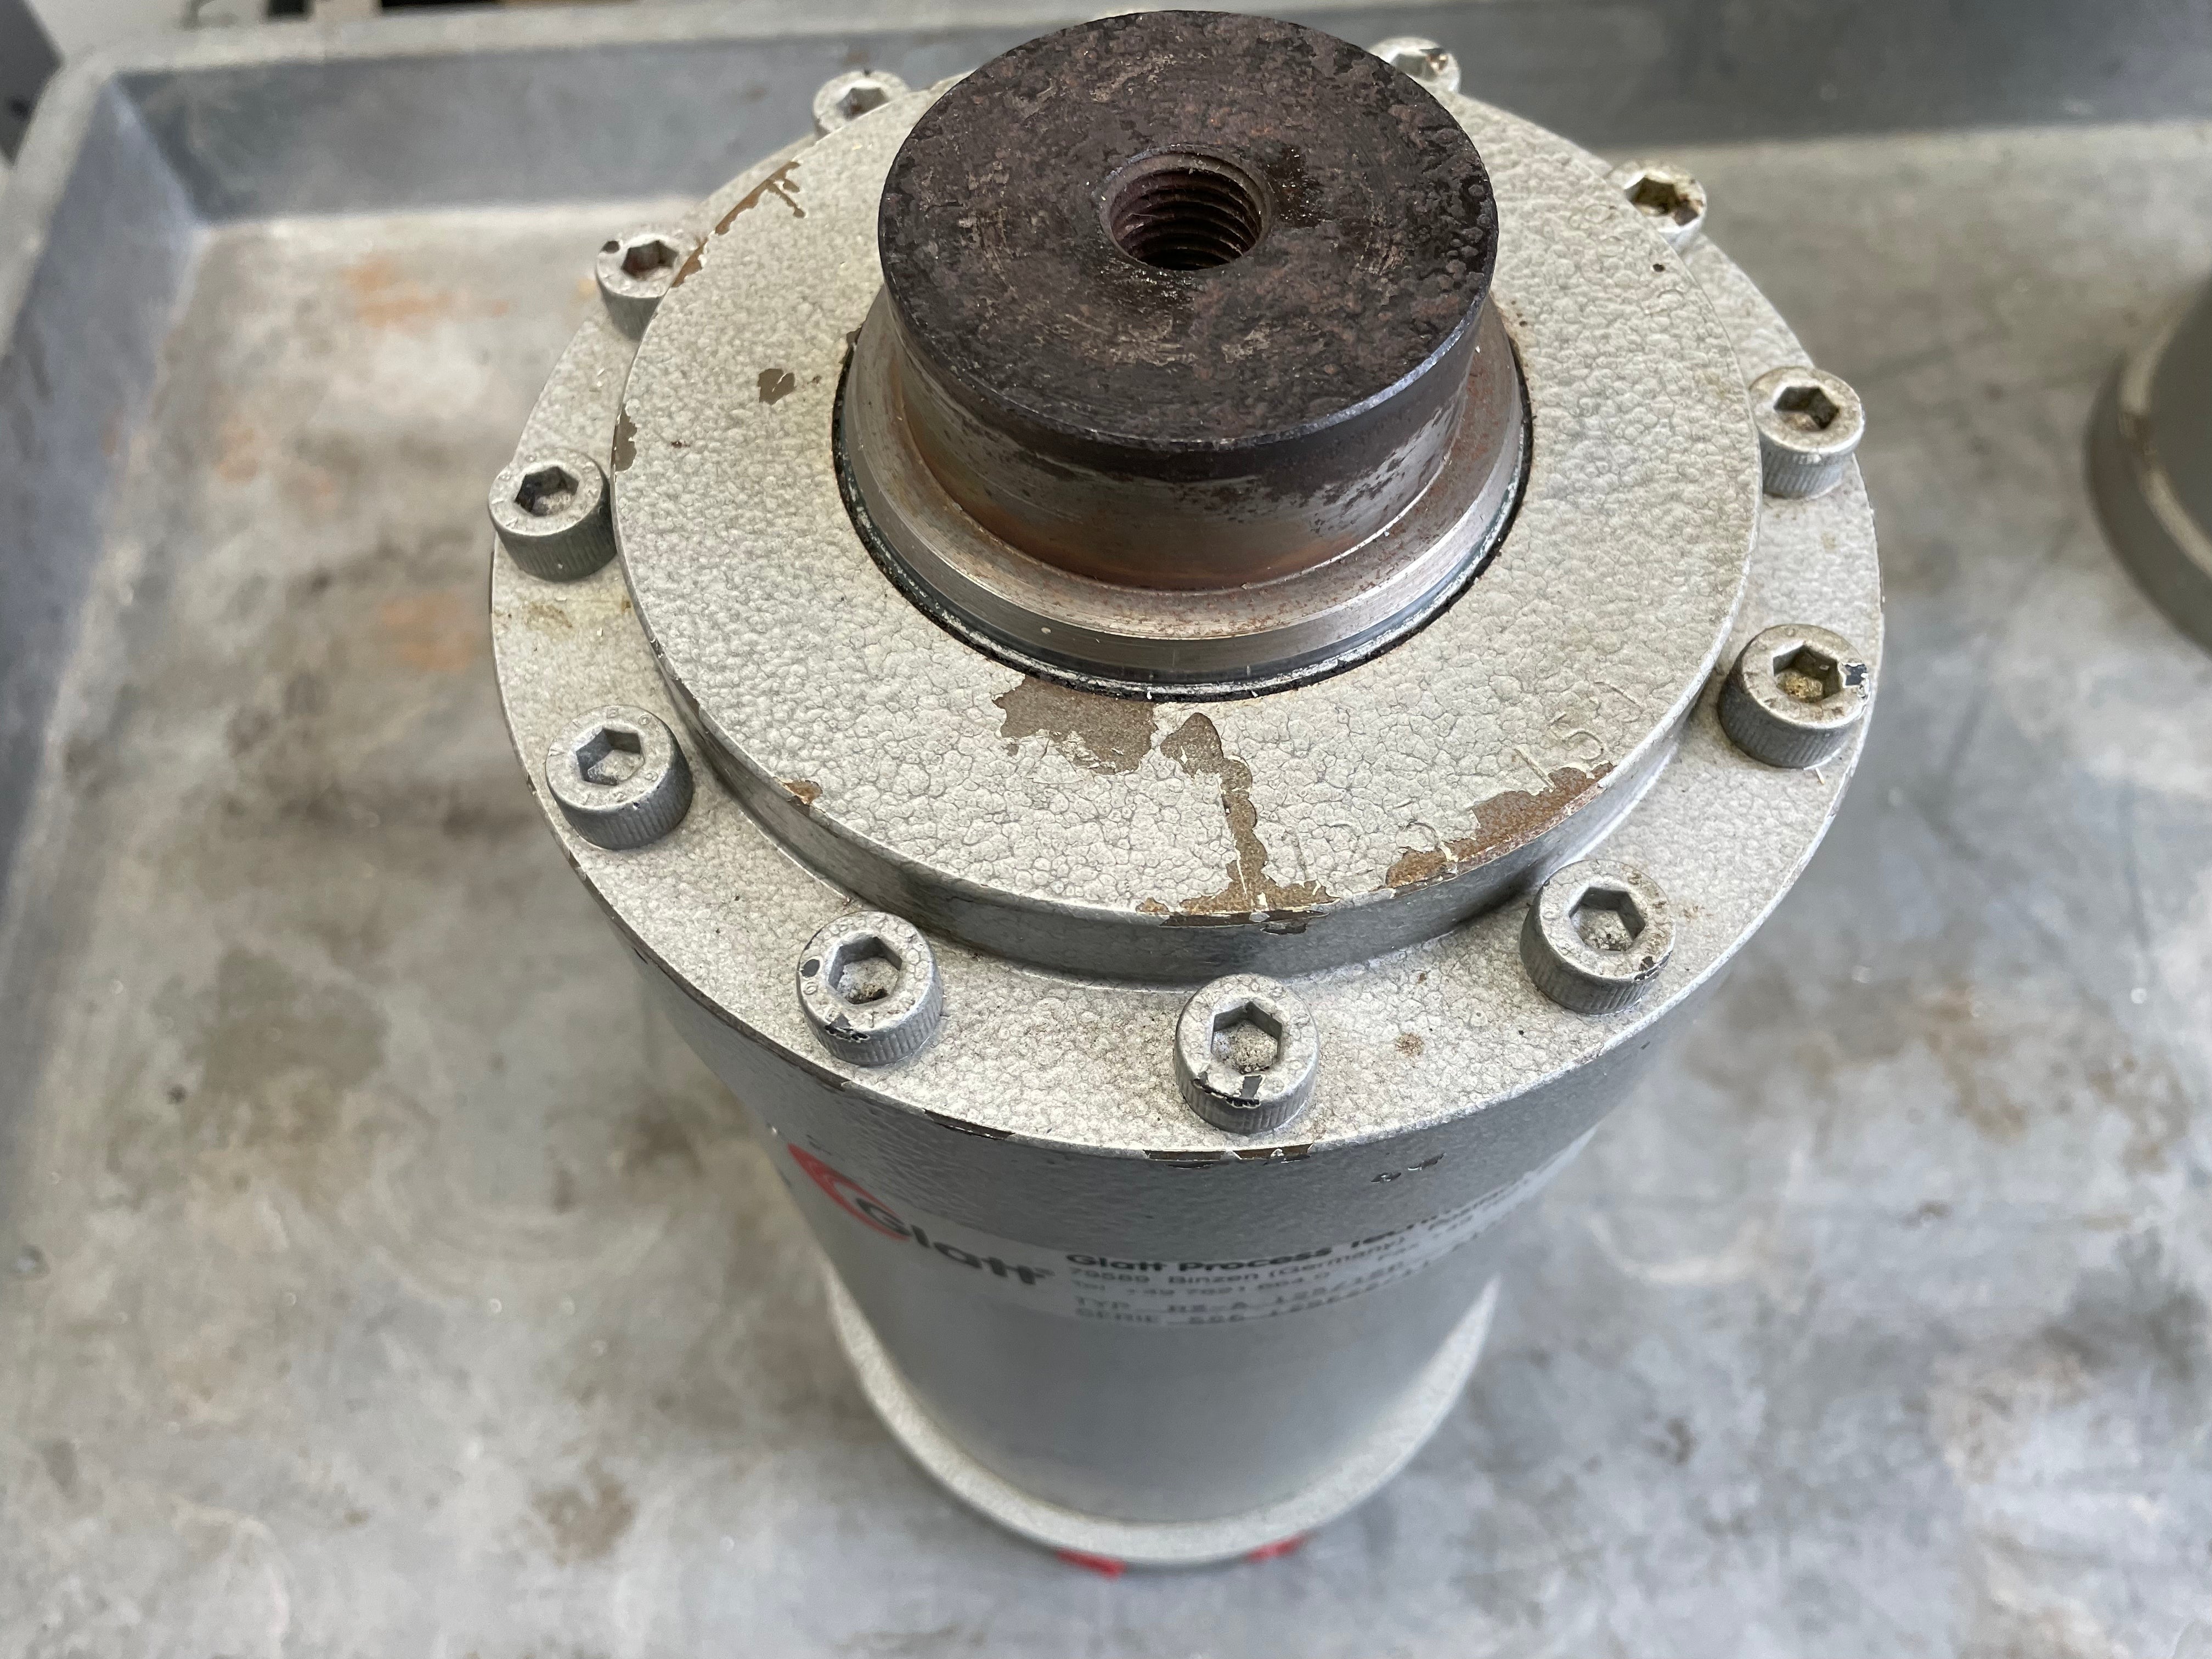 Lift Cylinder for Glatt GPCG 200 (HZ-A 125/150)